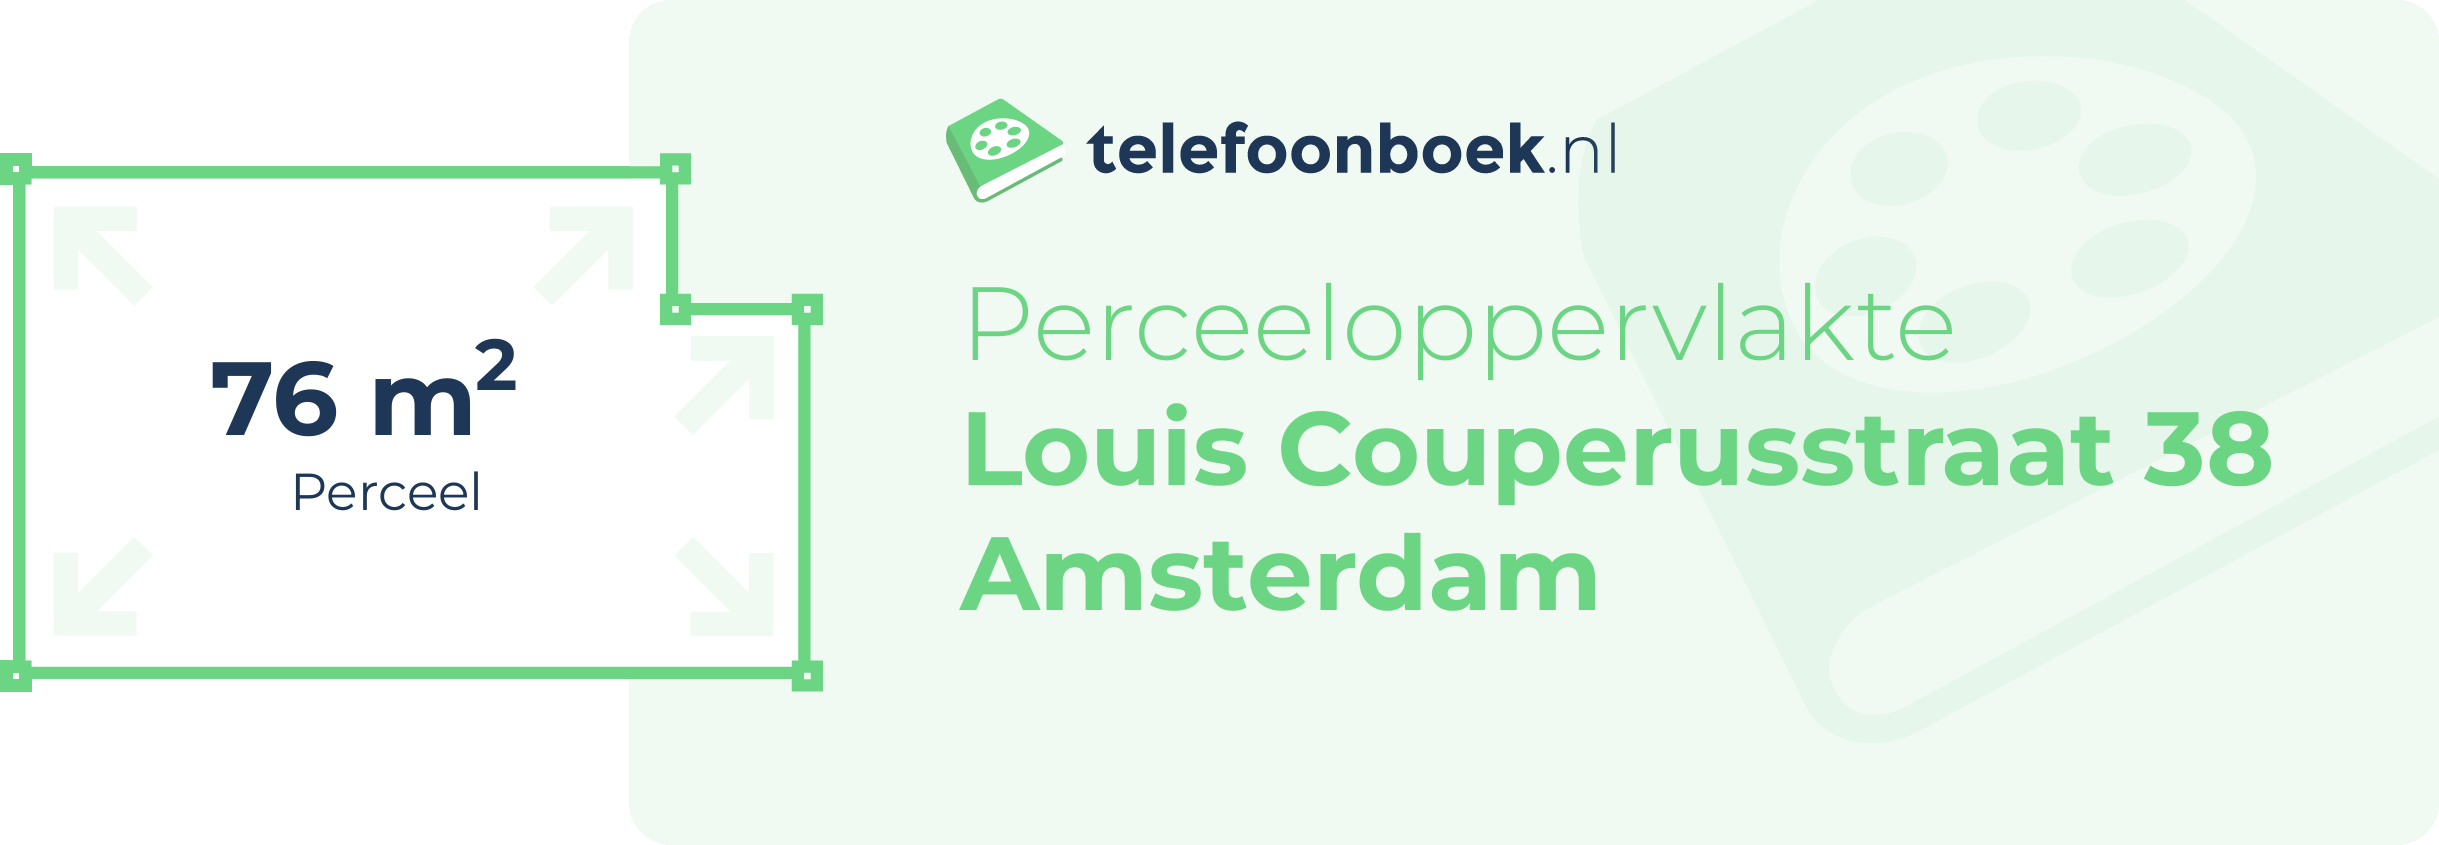 Perceeloppervlakte Louis Couperusstraat 38 Amsterdam